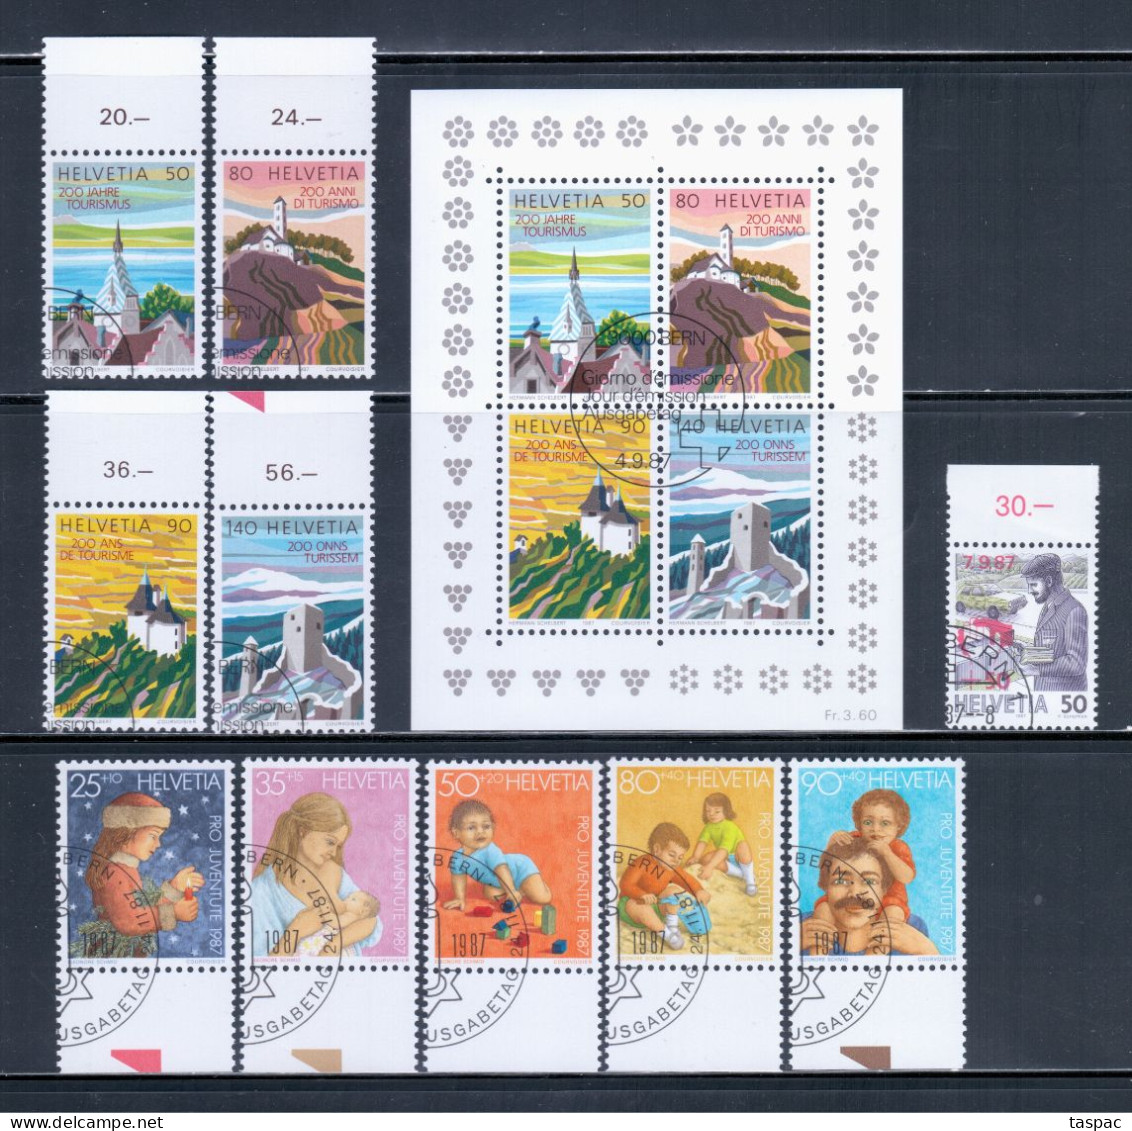 Switzerland 1987 Complete Year Set - Used (CTO) - 29 Stamps + 1 S/s (please See Description) - Oblitérés